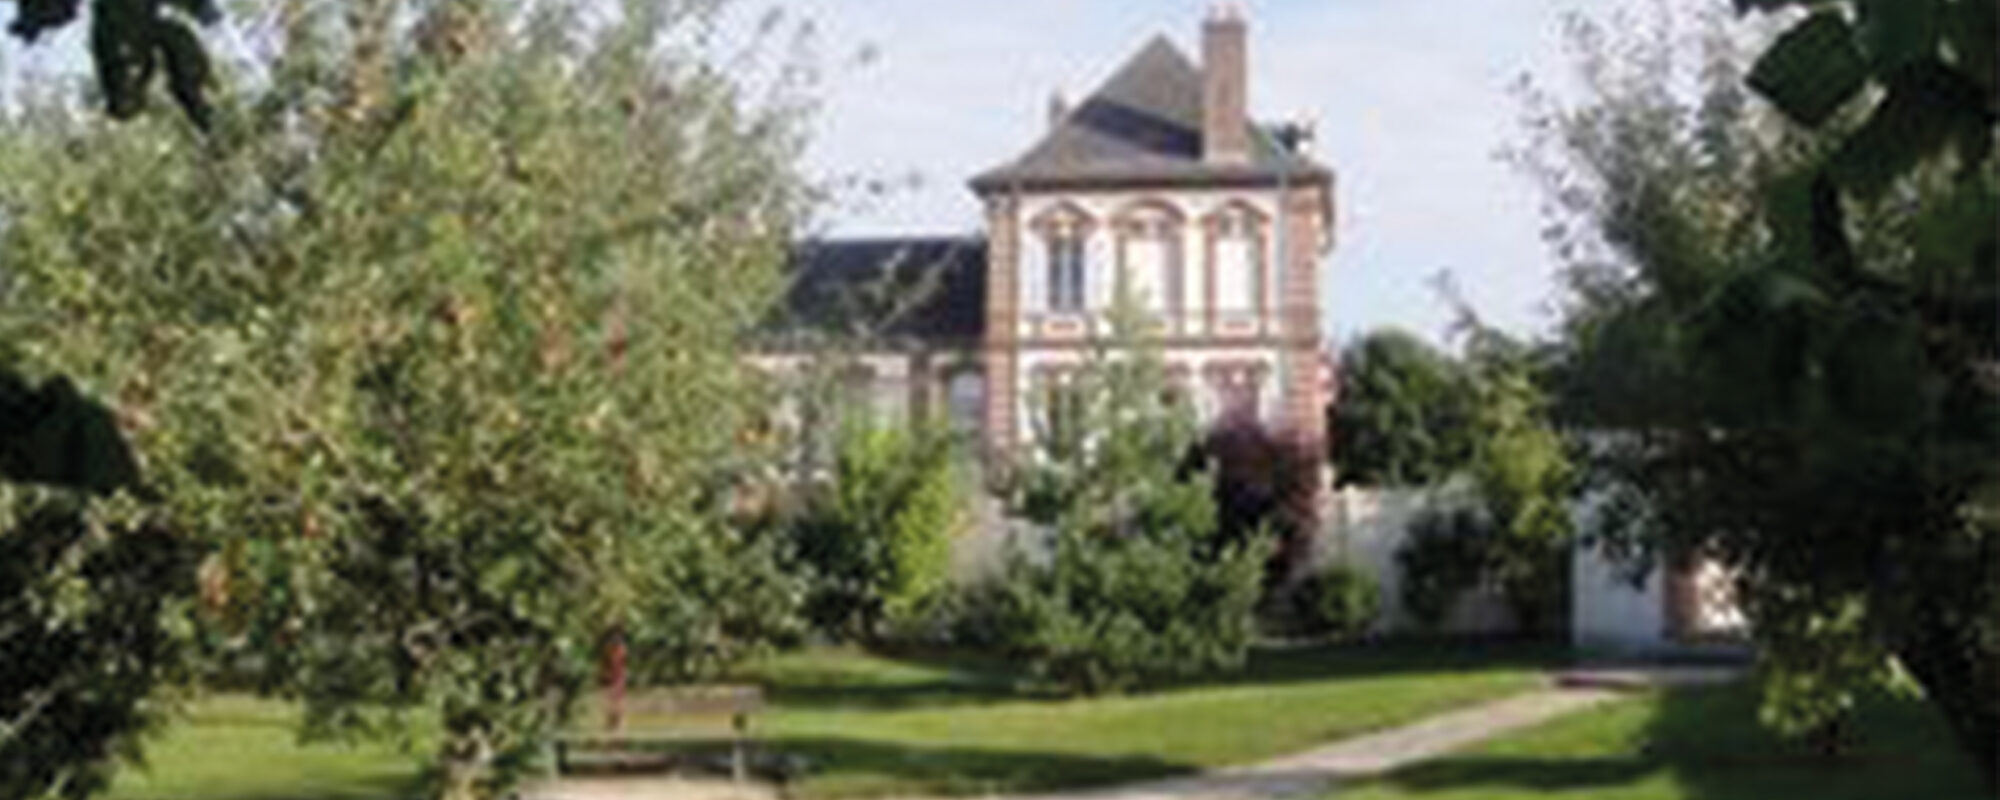 B-Mairie Neaufles Auvergny